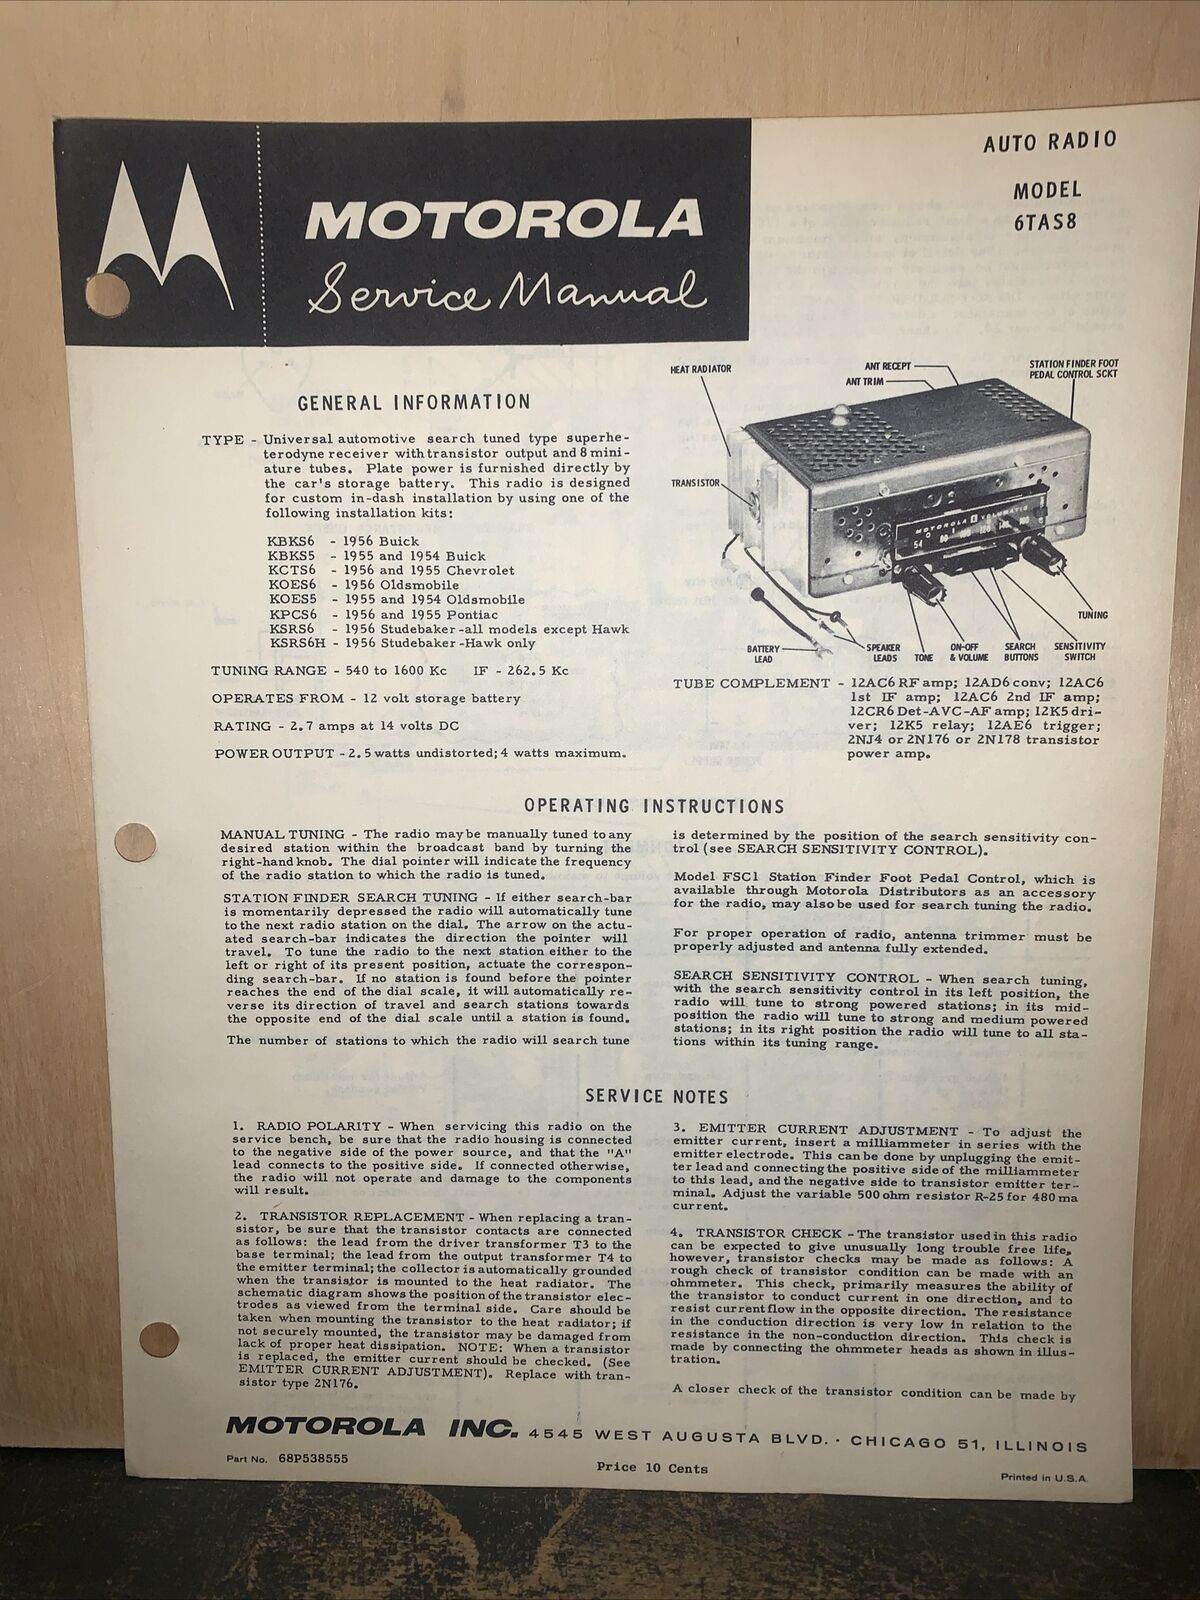 Motorola Auto Radio Model 6TAS8 Service Manual, Schematics.